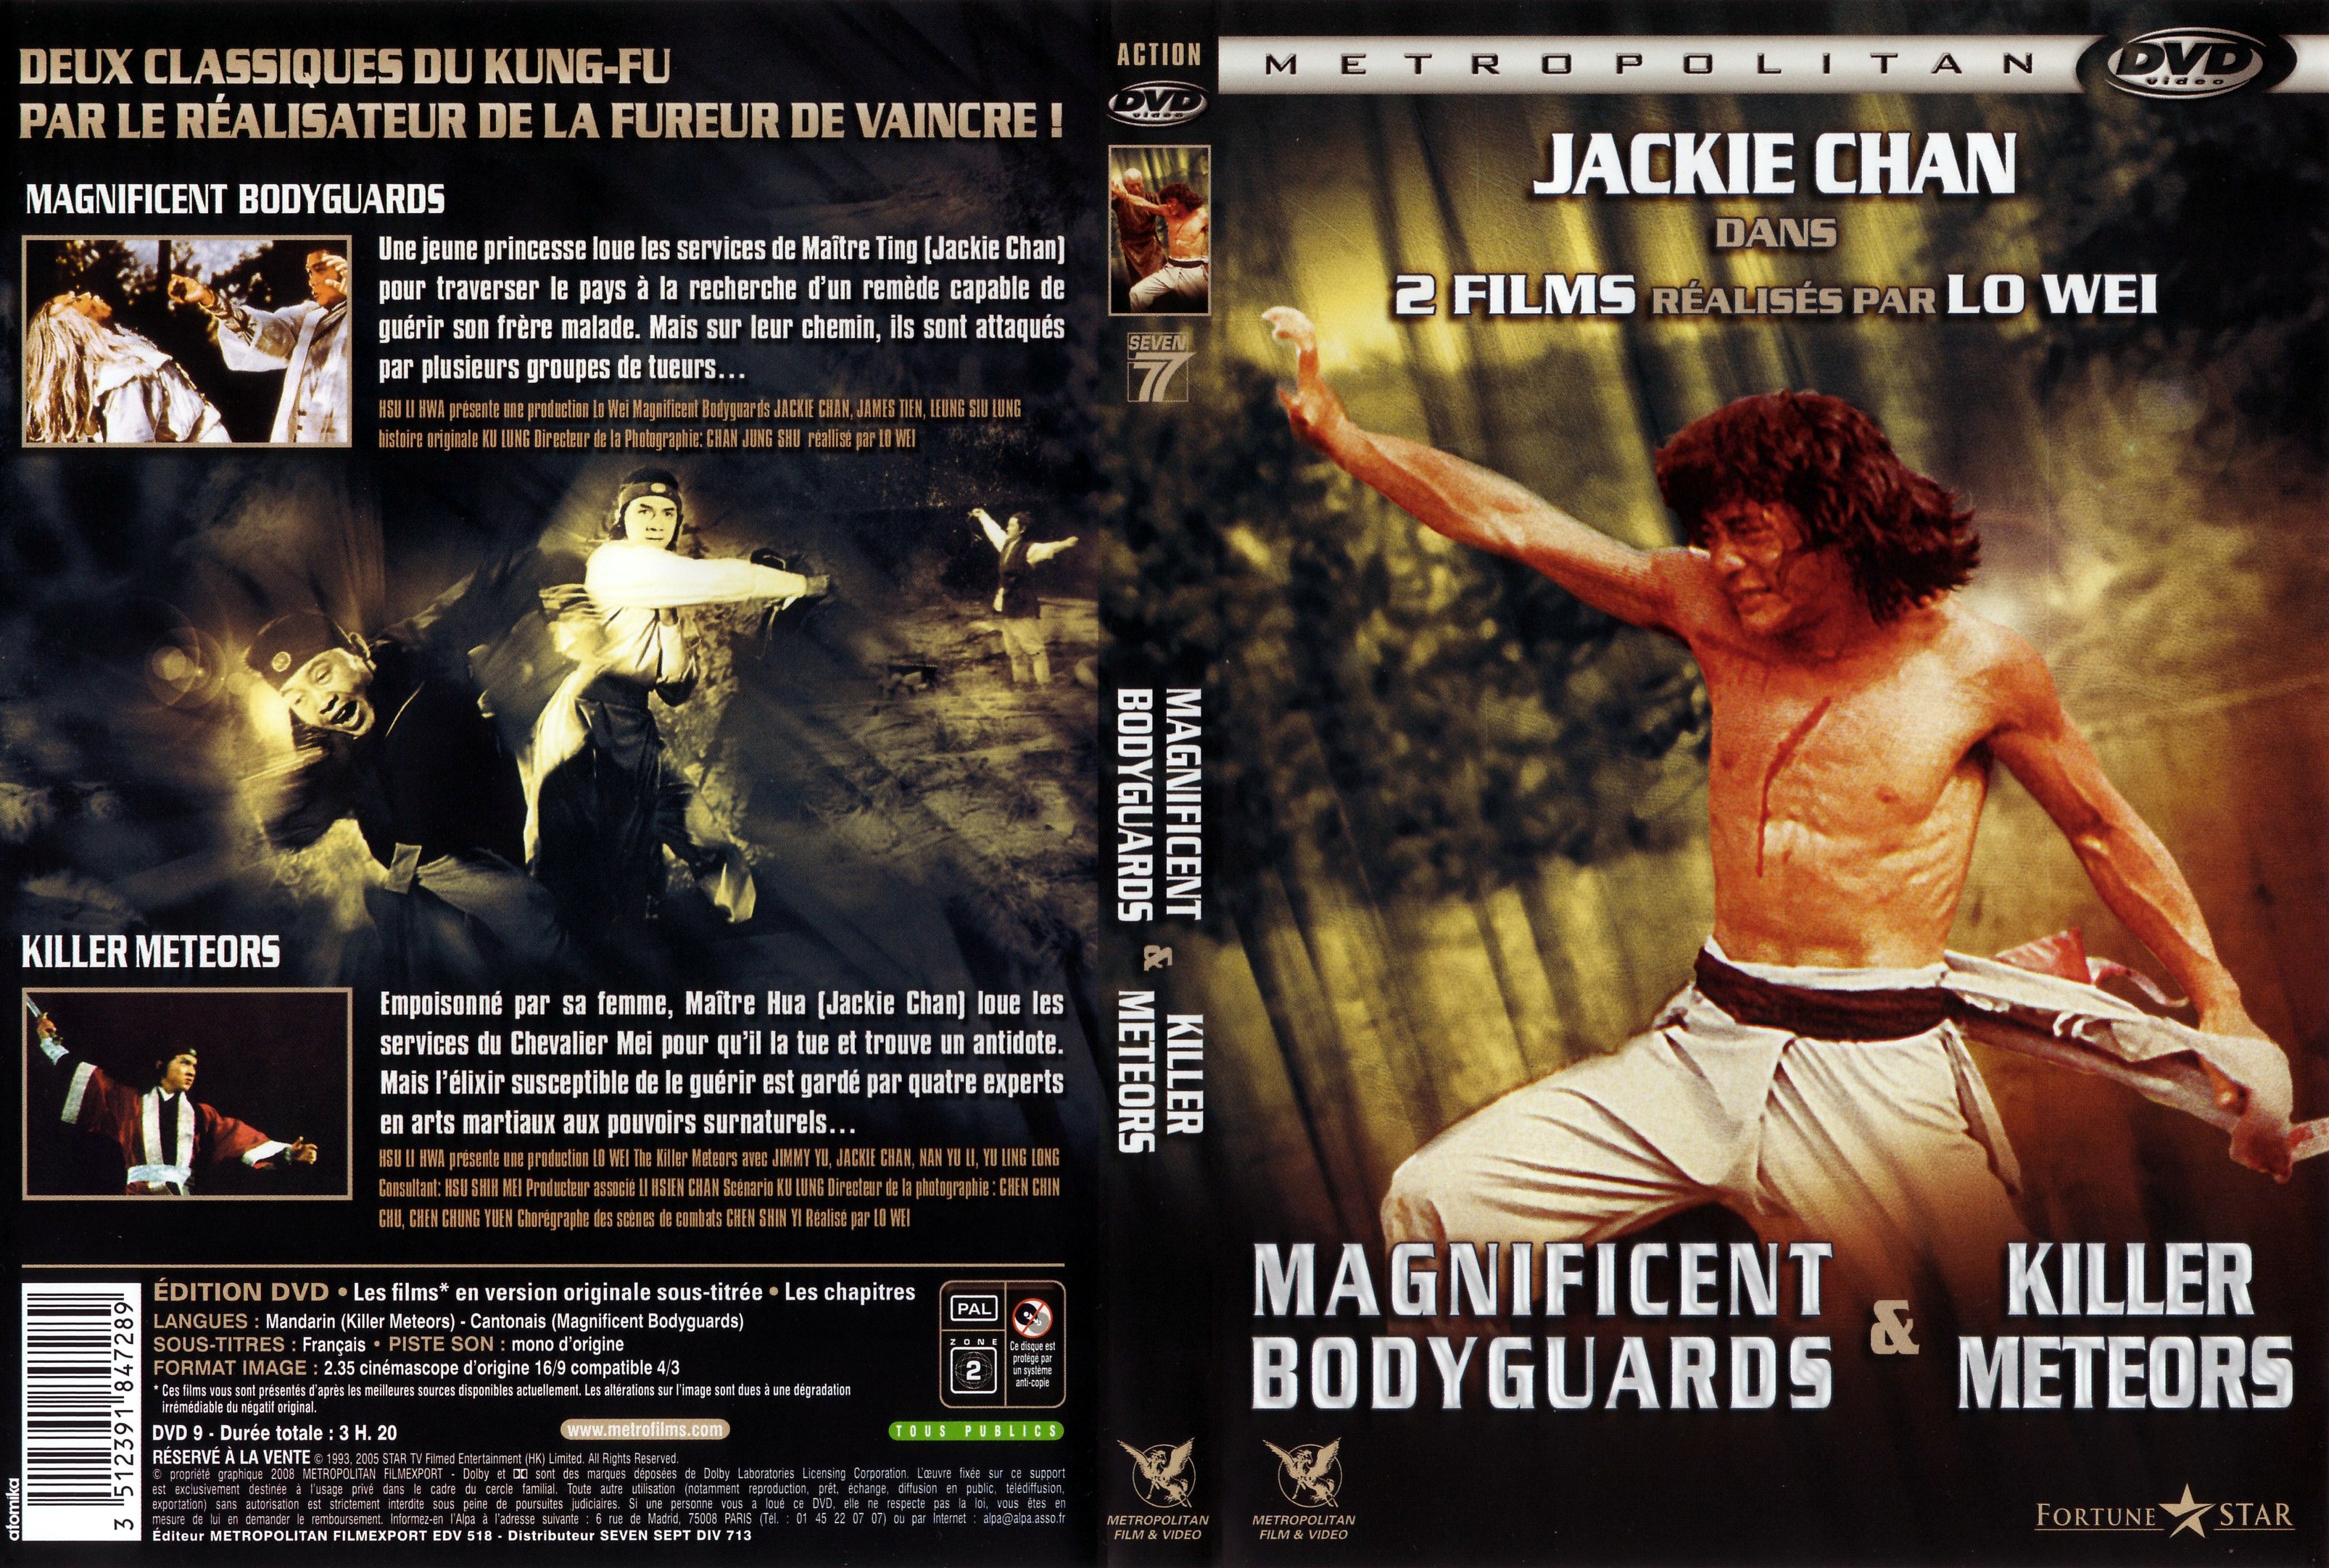 Jaquette DVD Magnificent bodyguards + Killer Meteors